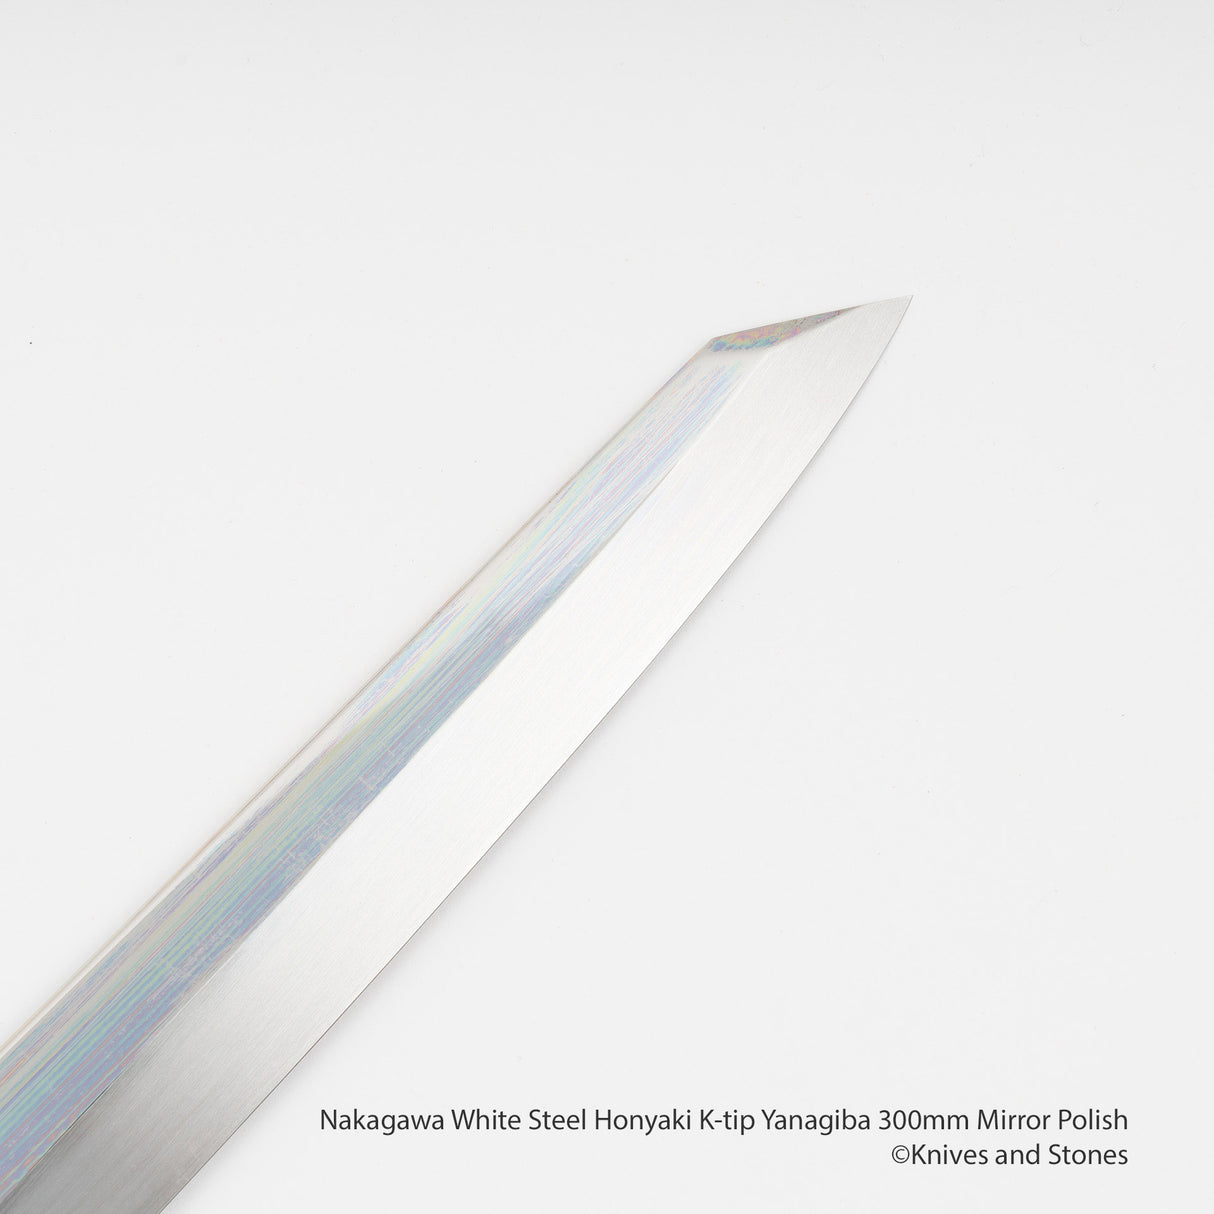 Nakagawa White Steel Honyaki K-tip Yanagiba 300mm Mirror Polish